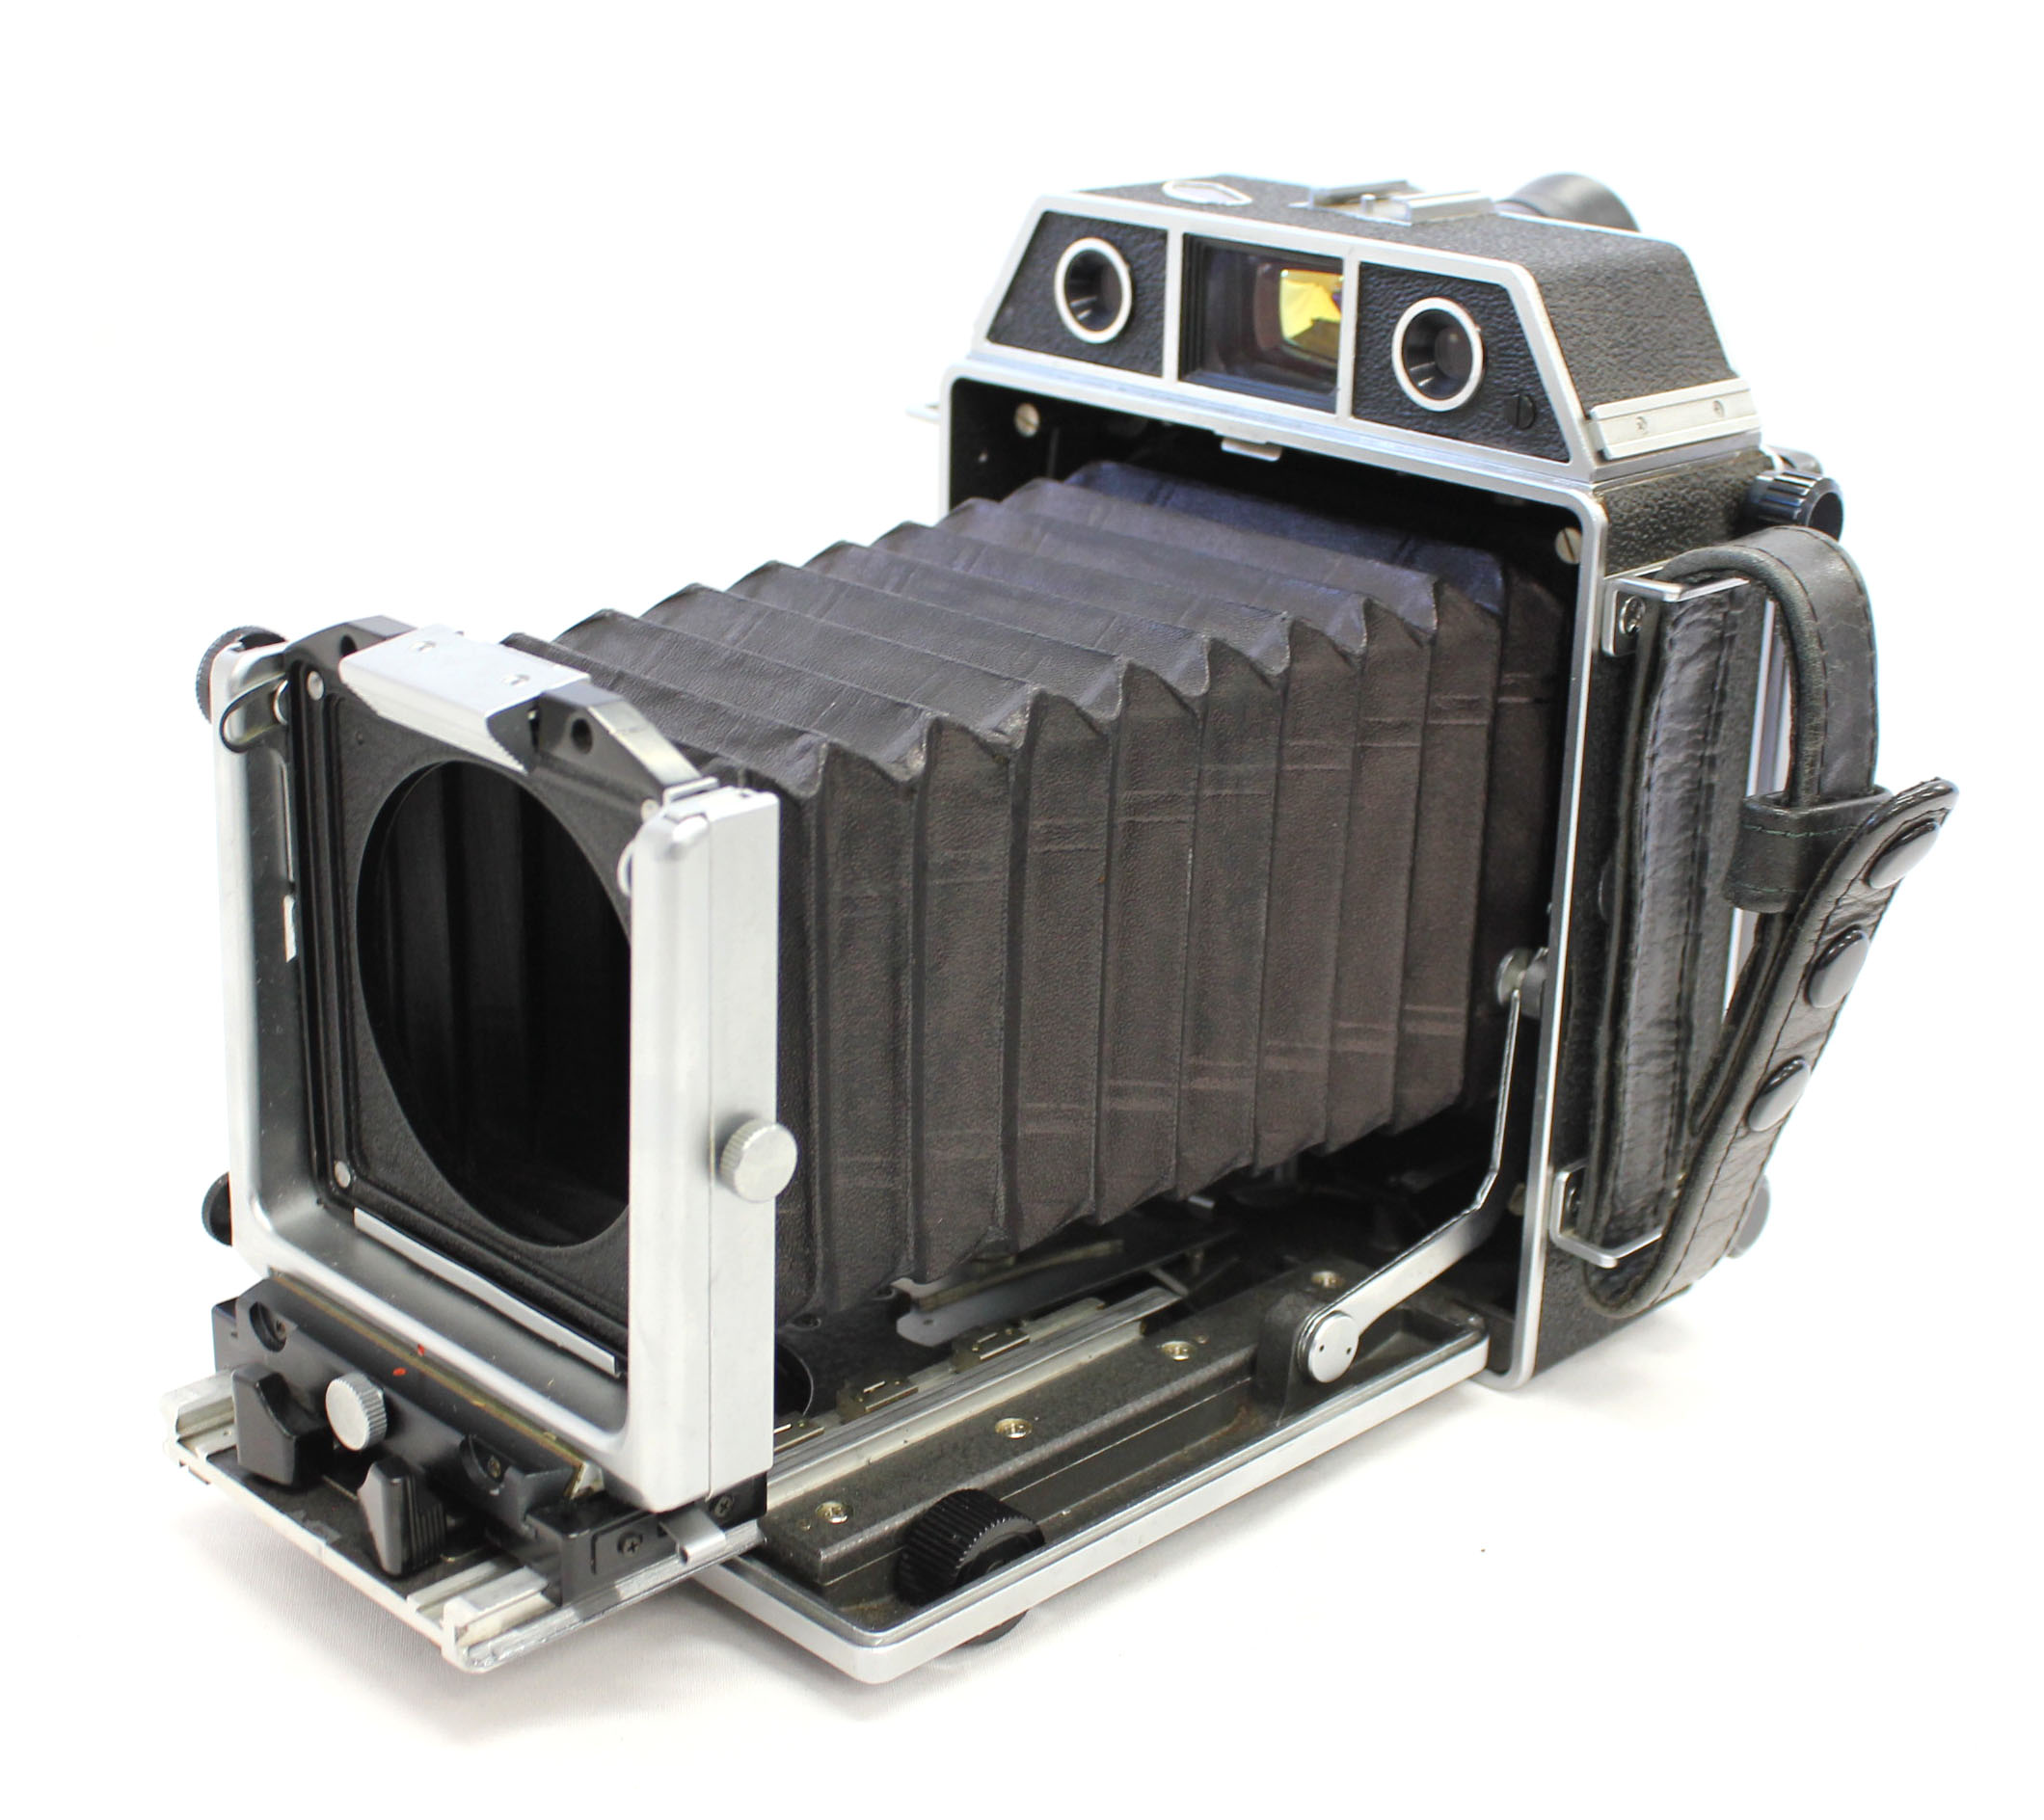  Topcon Horseman 985 Camera with Super Topcor 90mm F/5.6 lens from Japan Photo 1